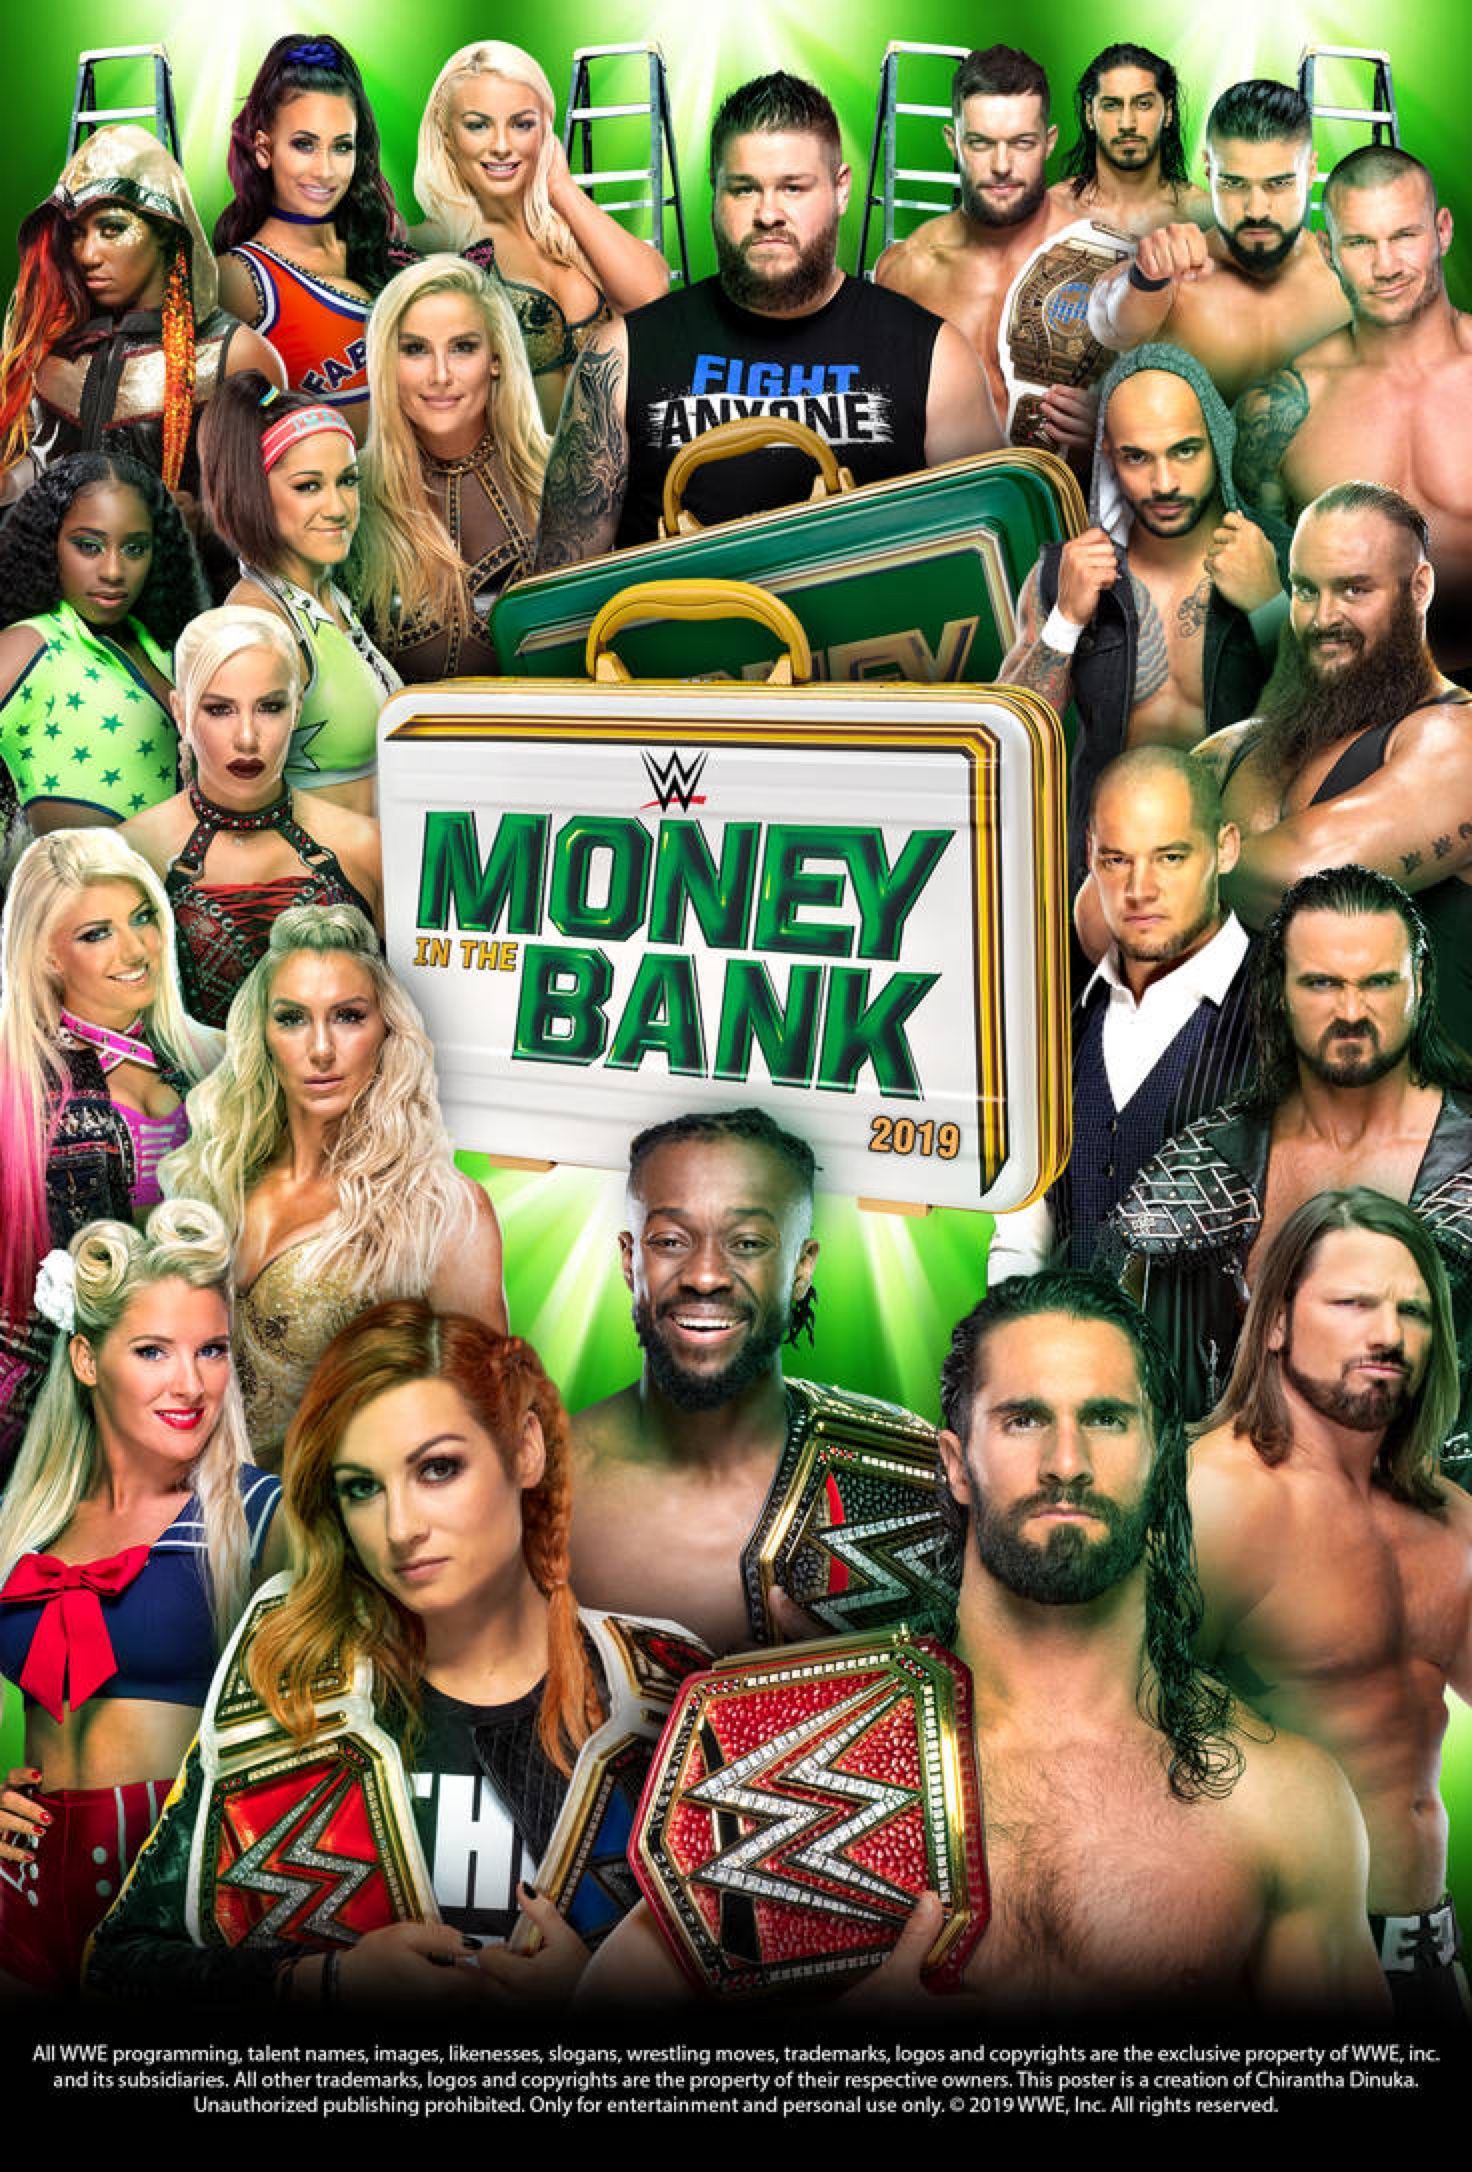 WWE Money in the Bank 2019 Poster. Wwe money, Wwe, Wwe ppv